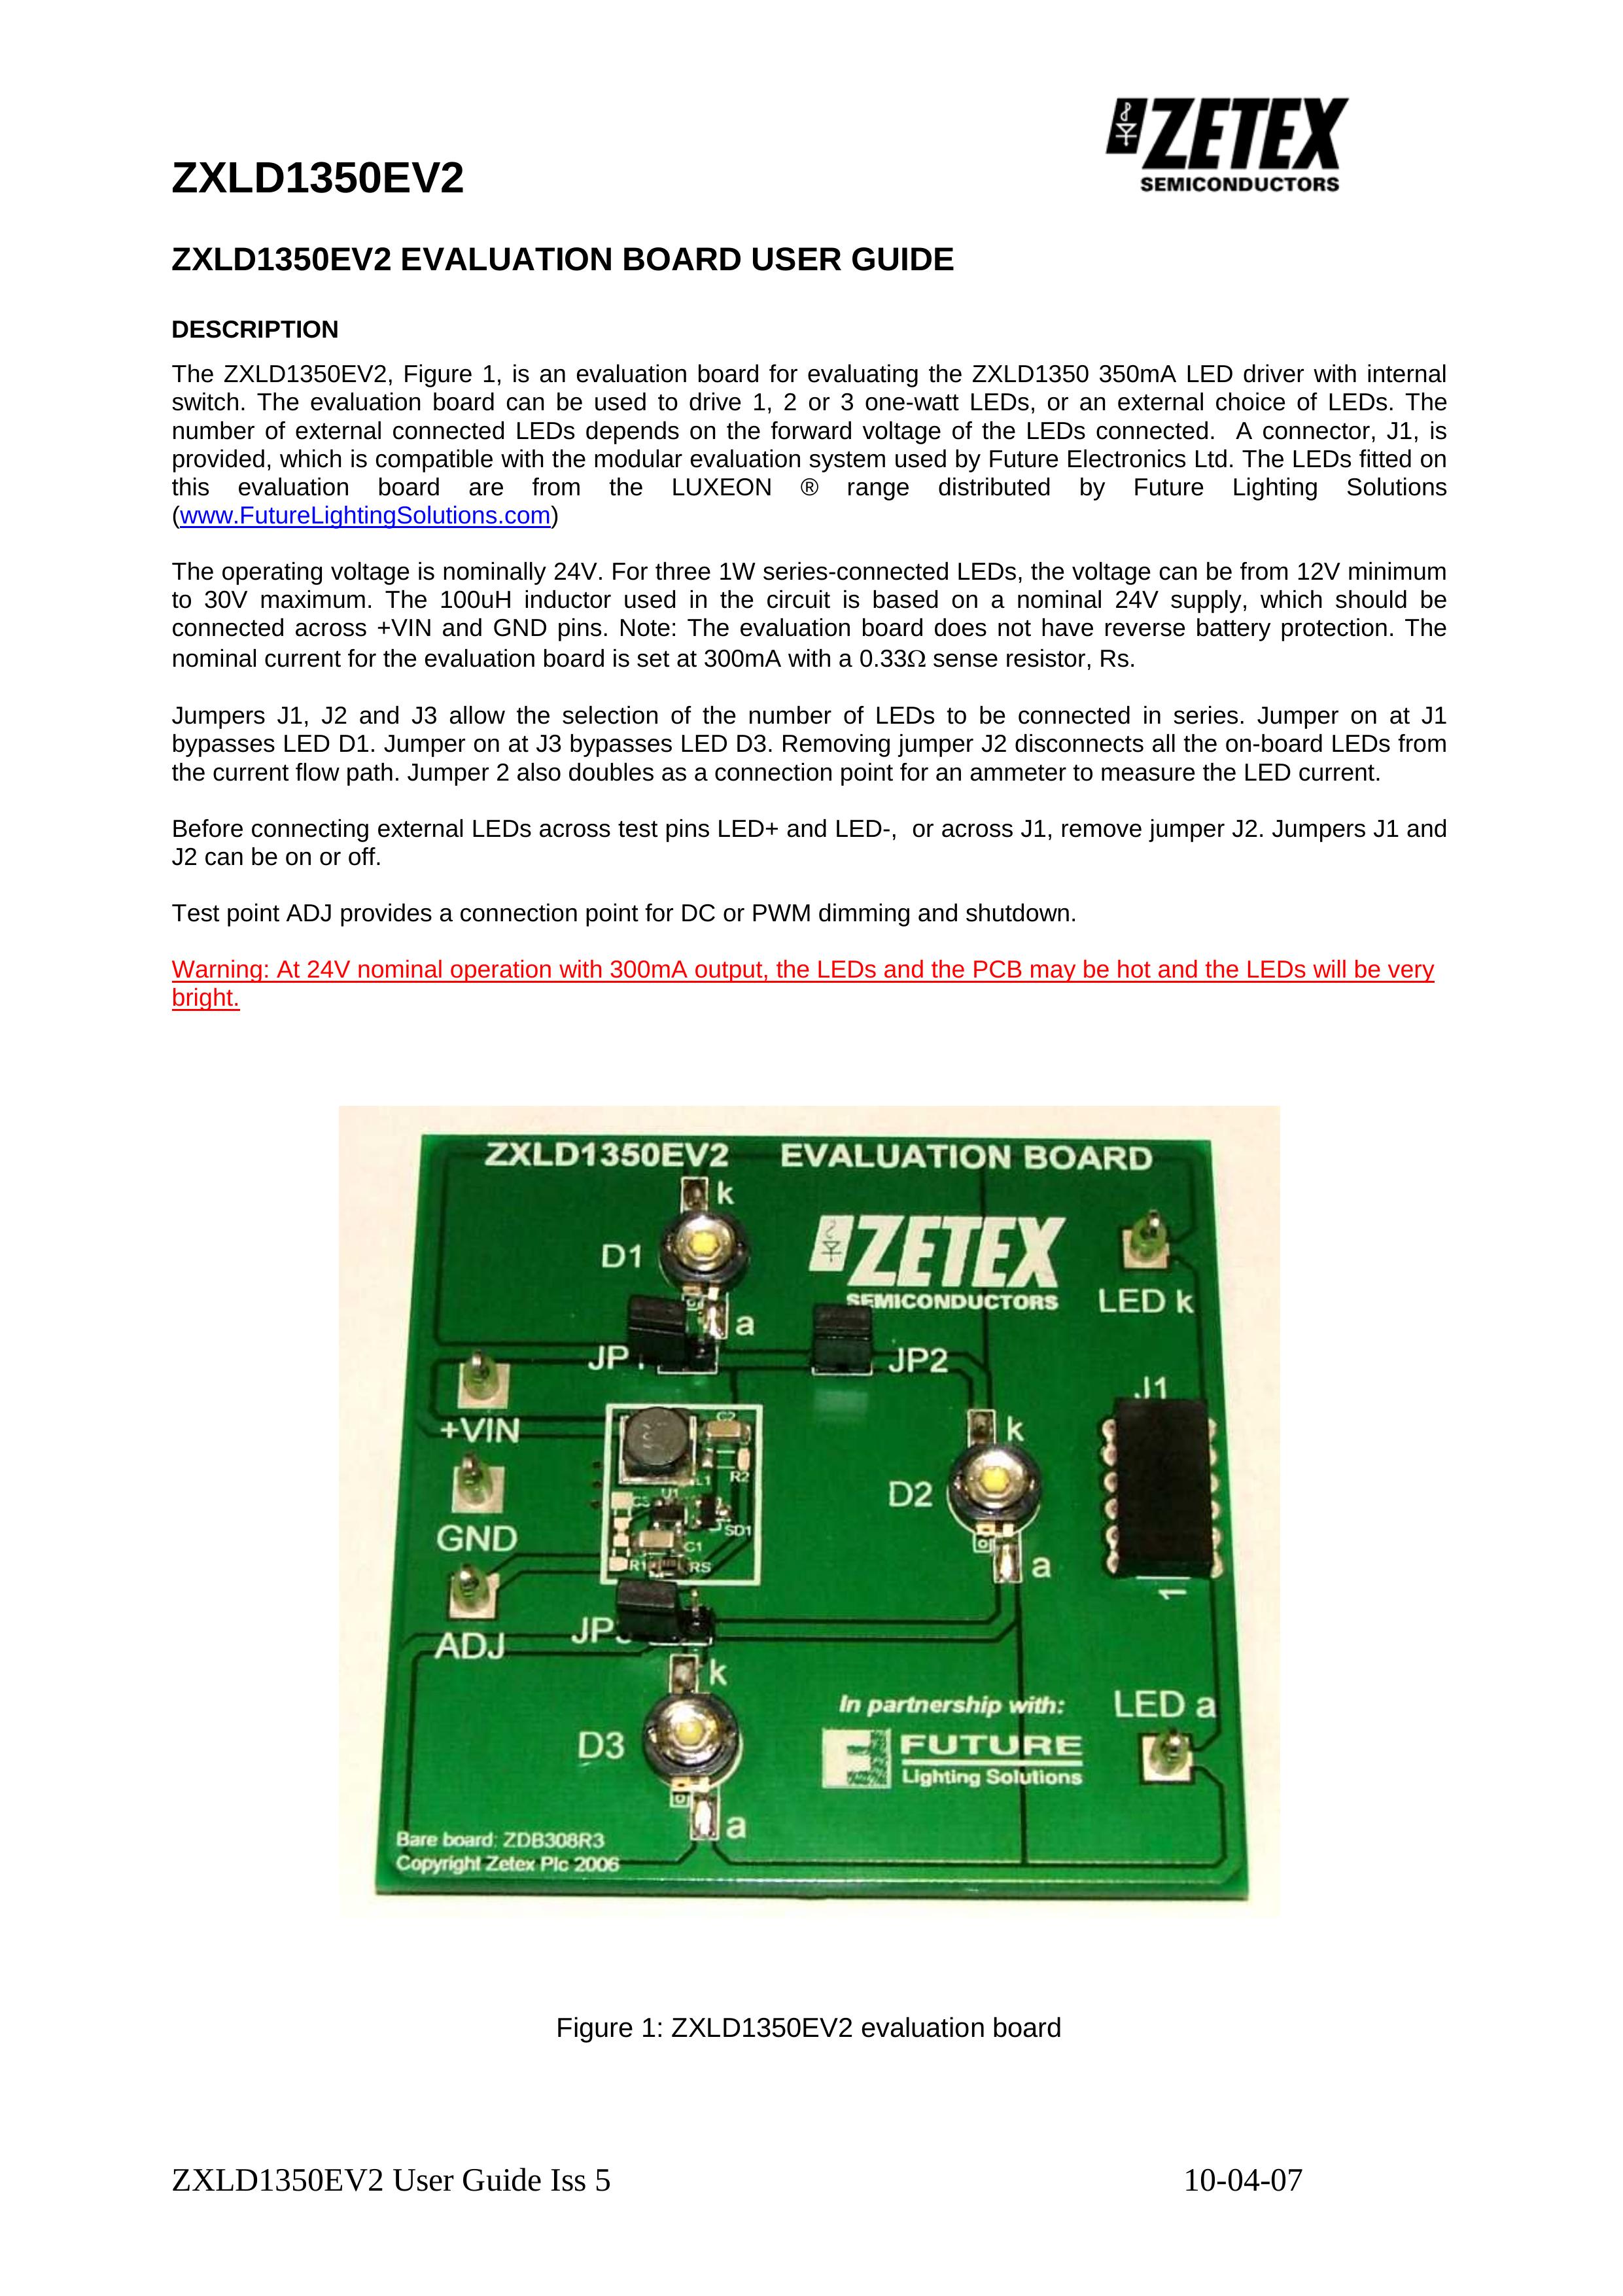 Zetex Semiconductors PLC zxld1350ev2 Personal Lift User Manual